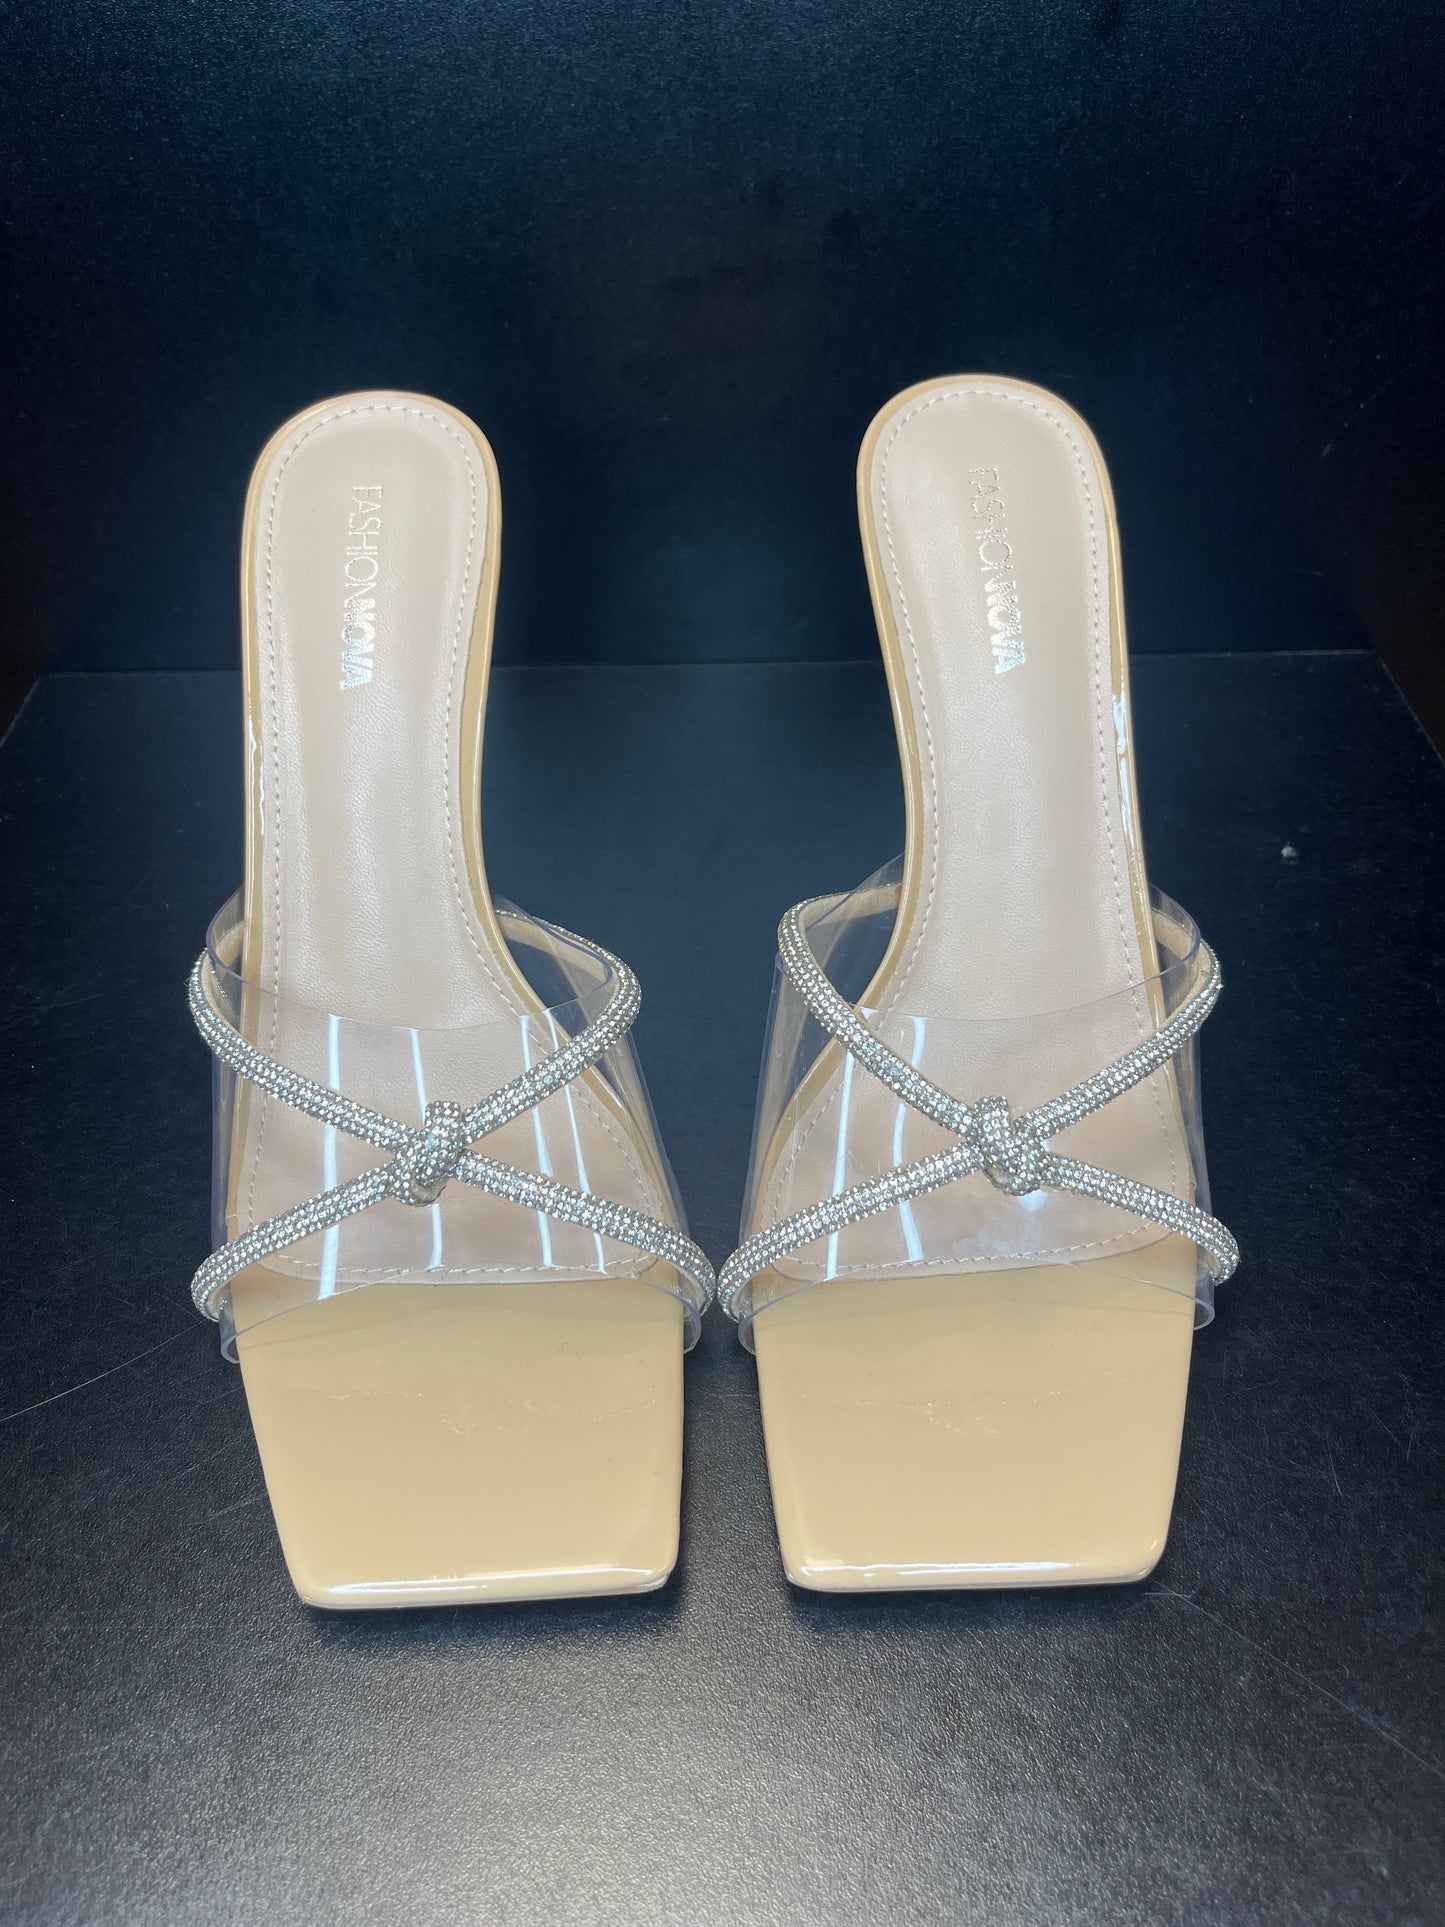 Shoes Heels Stiletto By Fashion Nova  Size: 8.5